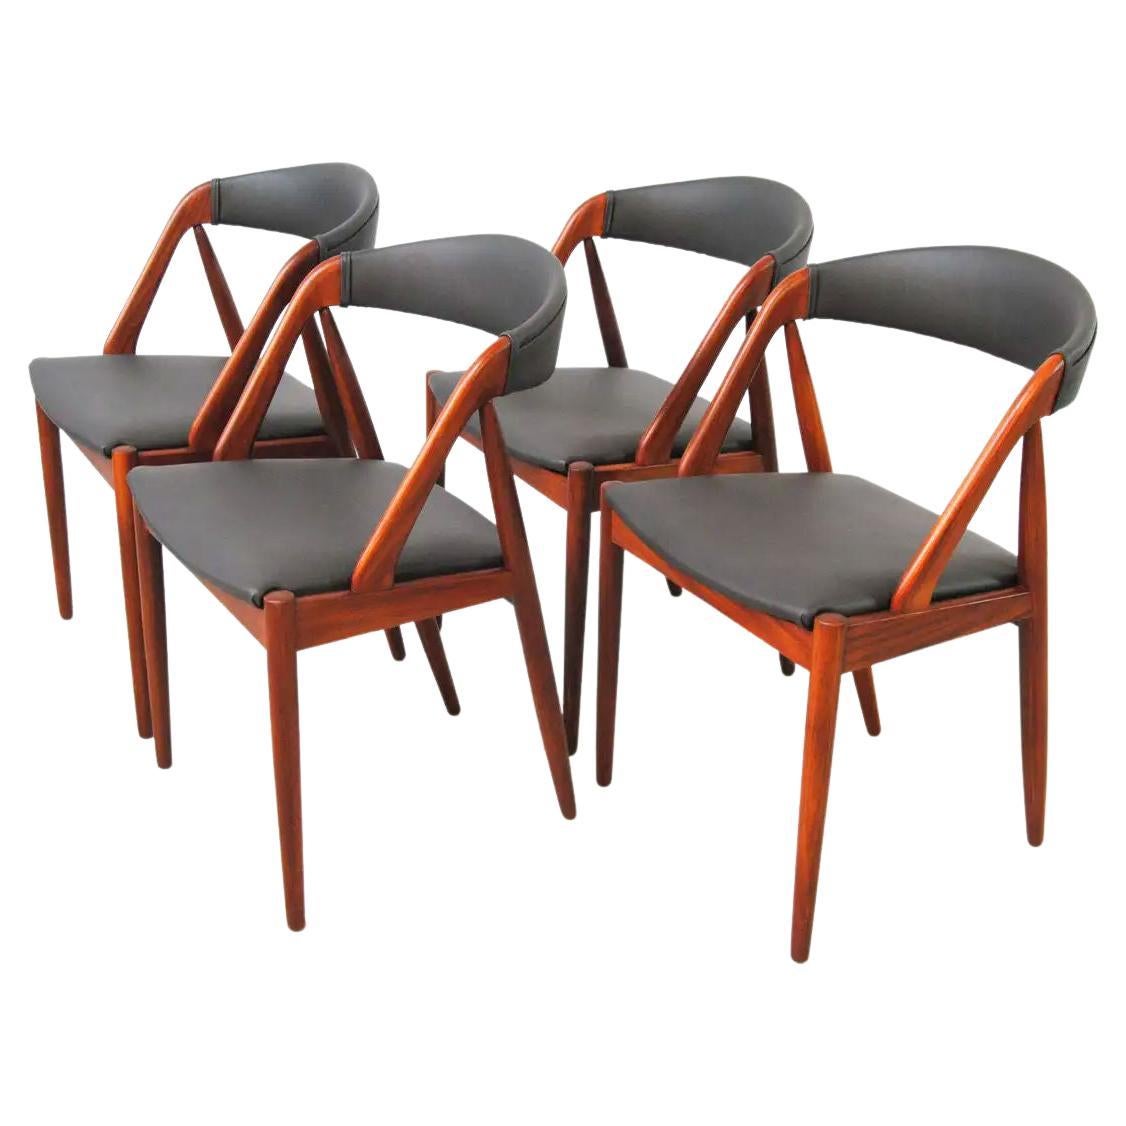 Four Restored Kai Kristiansen Teak Dining Chairs, Custom Reupholstery Included